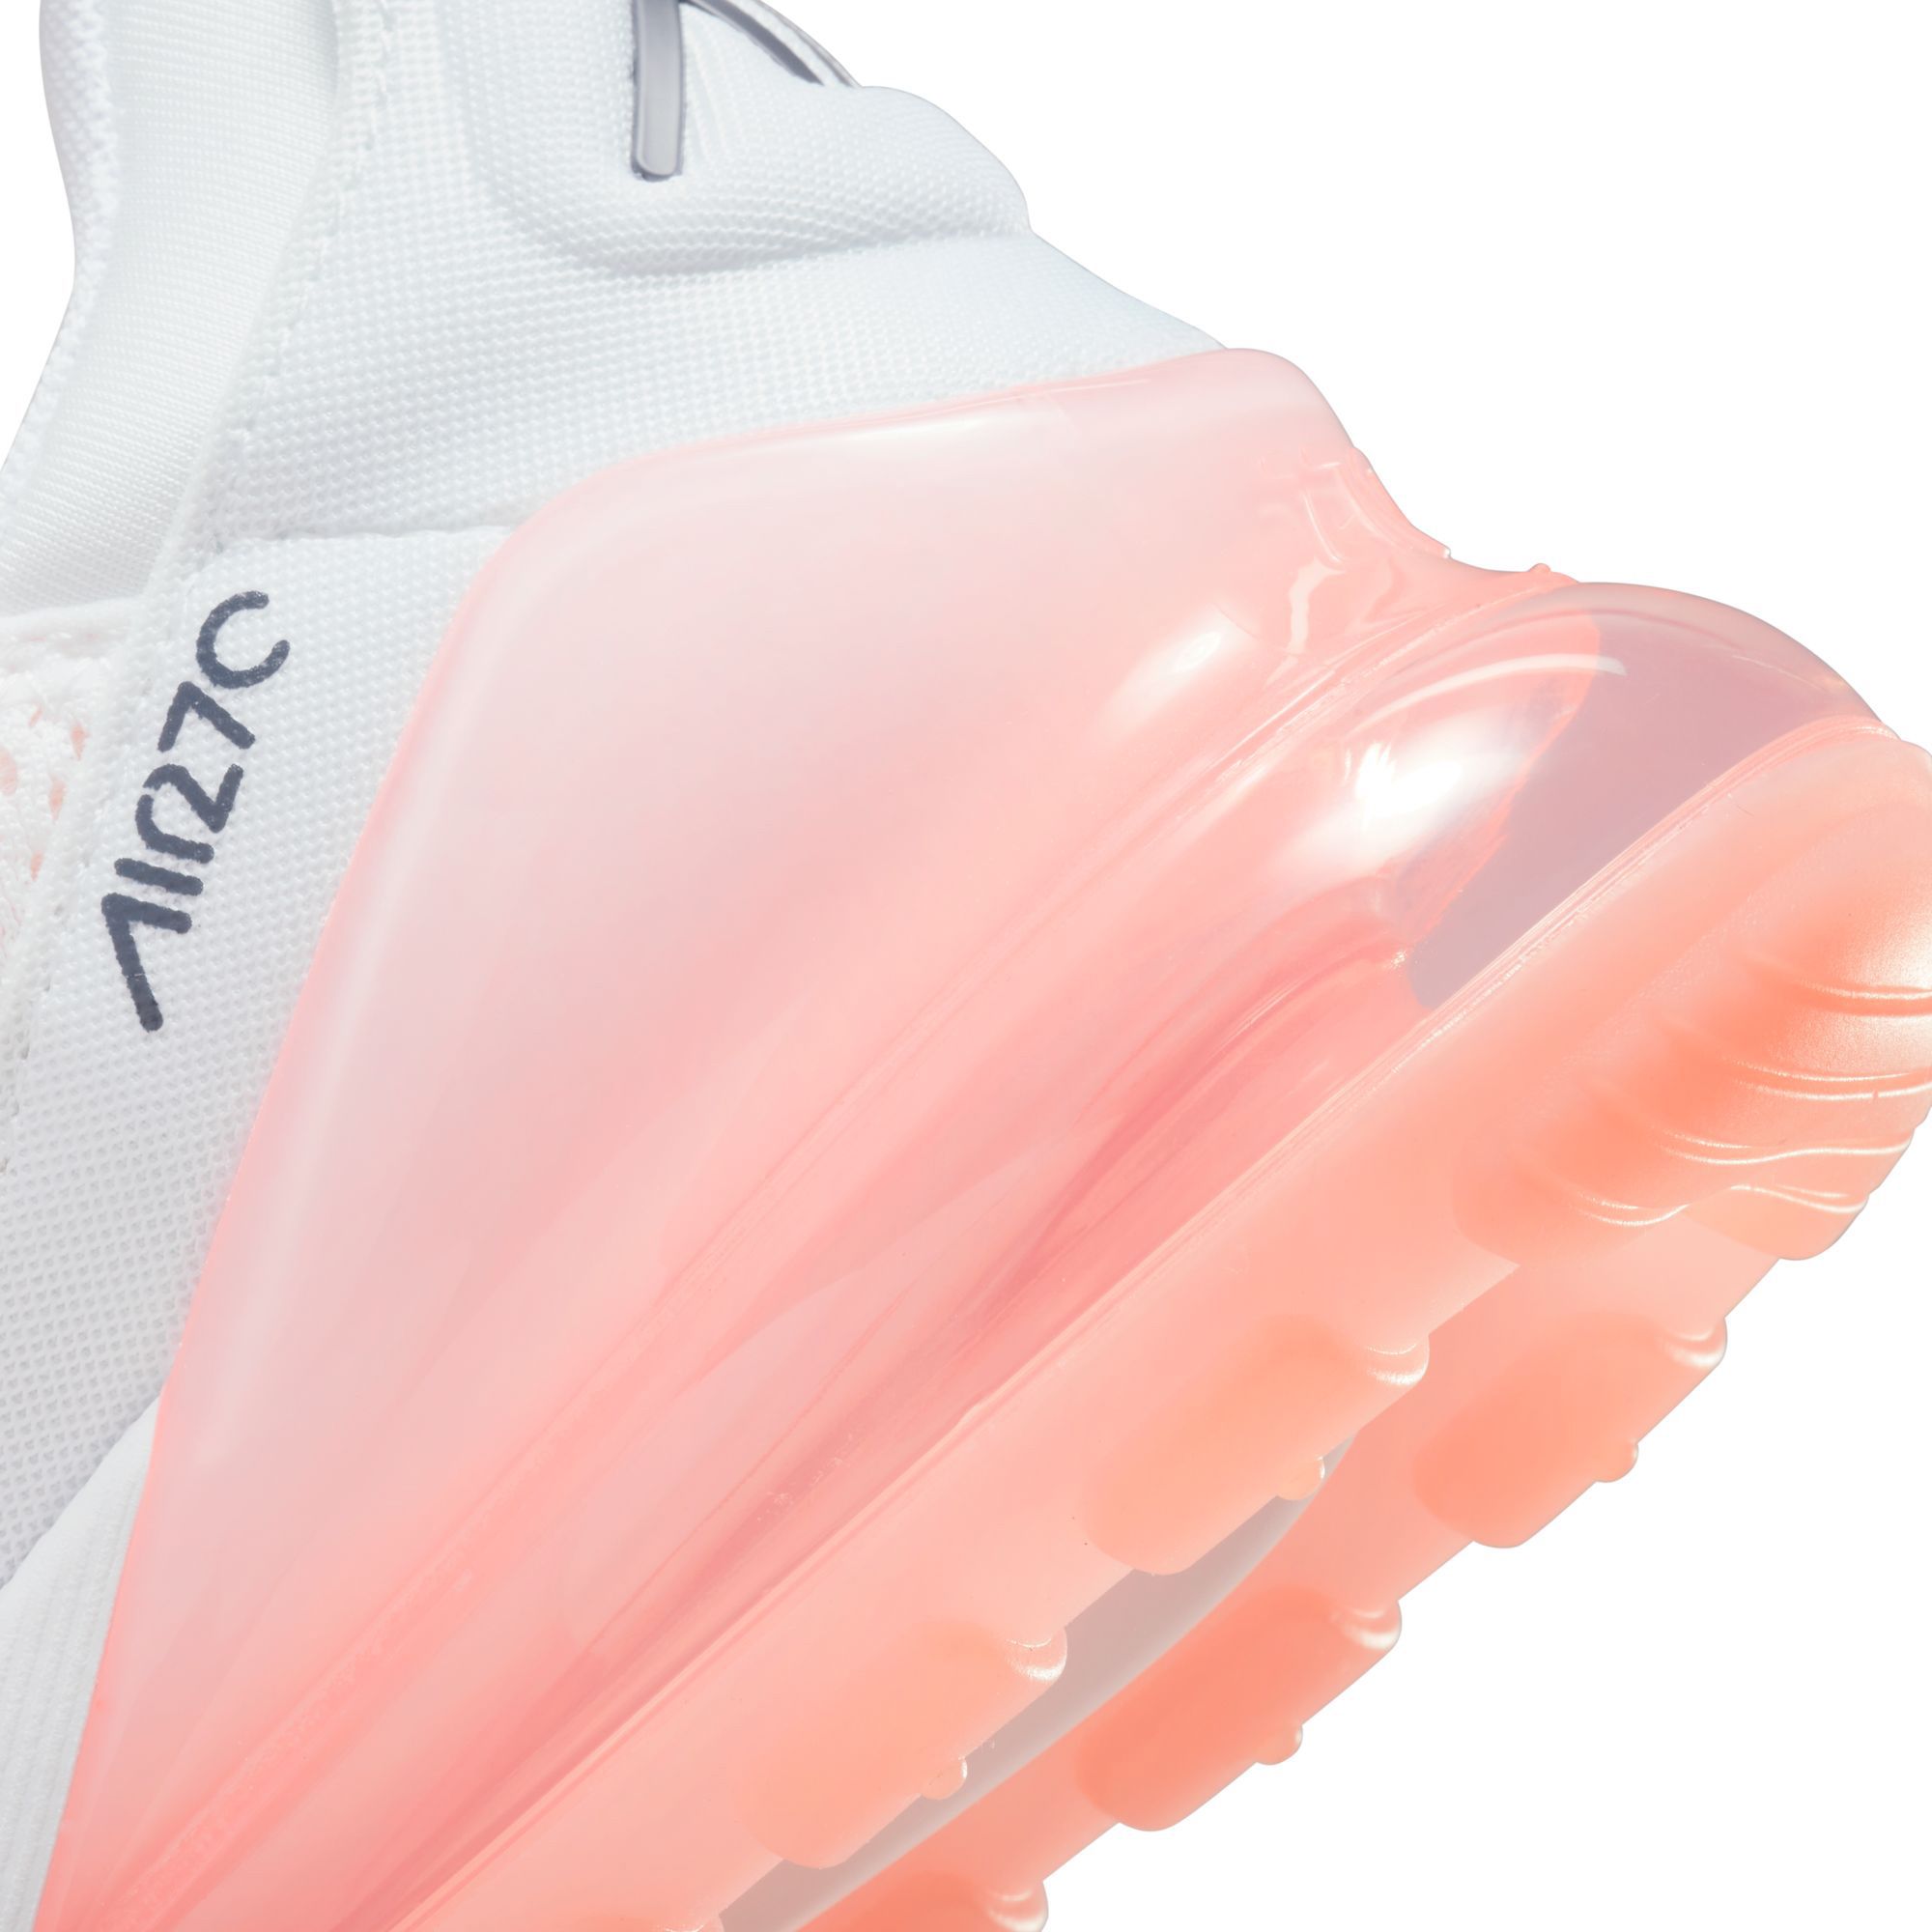 Nike Air Max 270 White/Midnight Navy/Atmosphere Women's Shoe